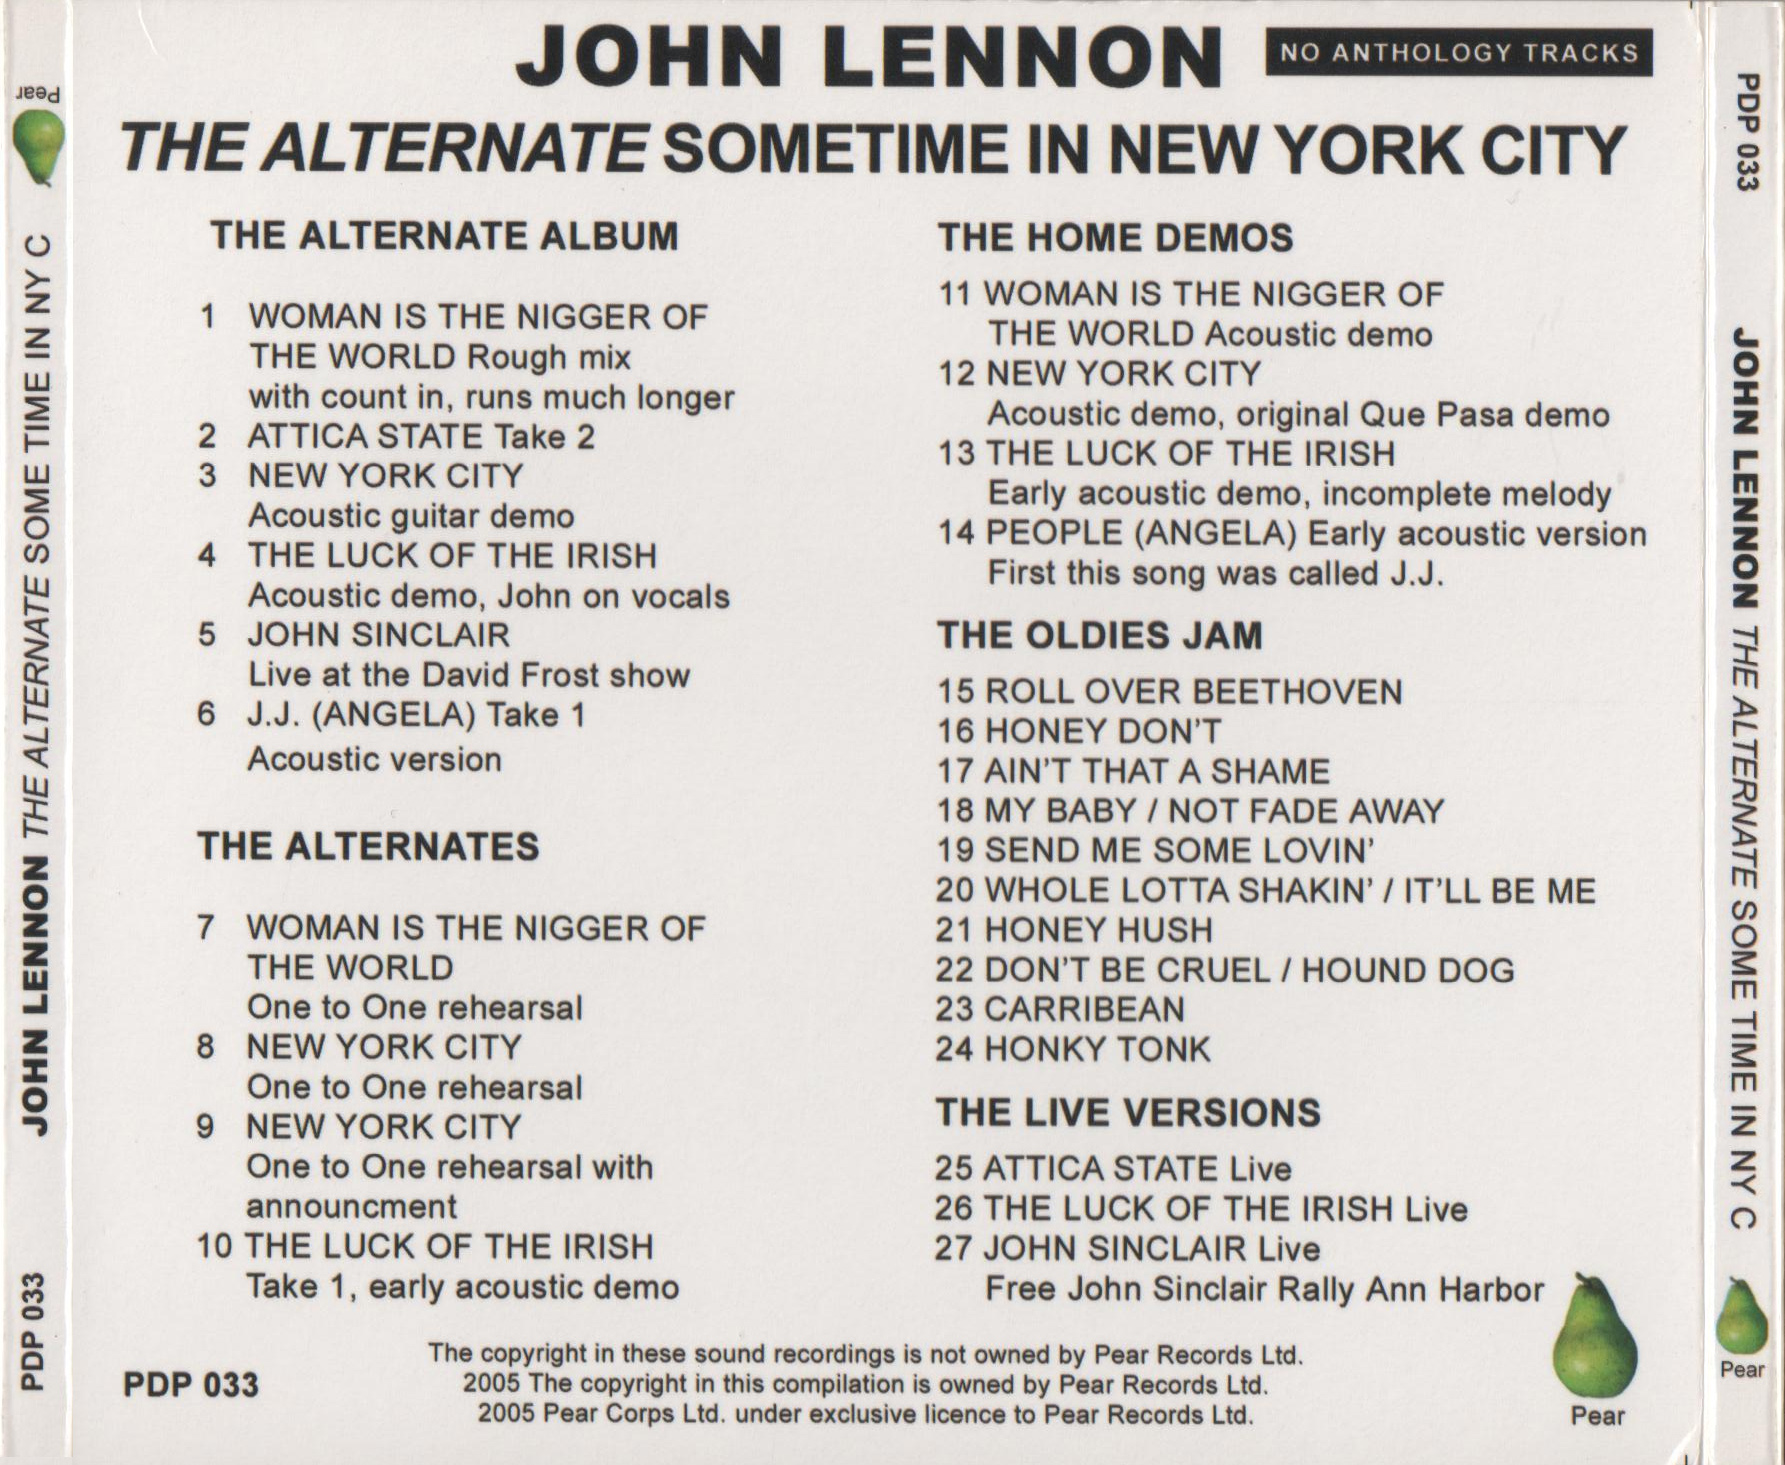 JohnLennon-AlternateSometimeInNewYorkCity (9).jpg